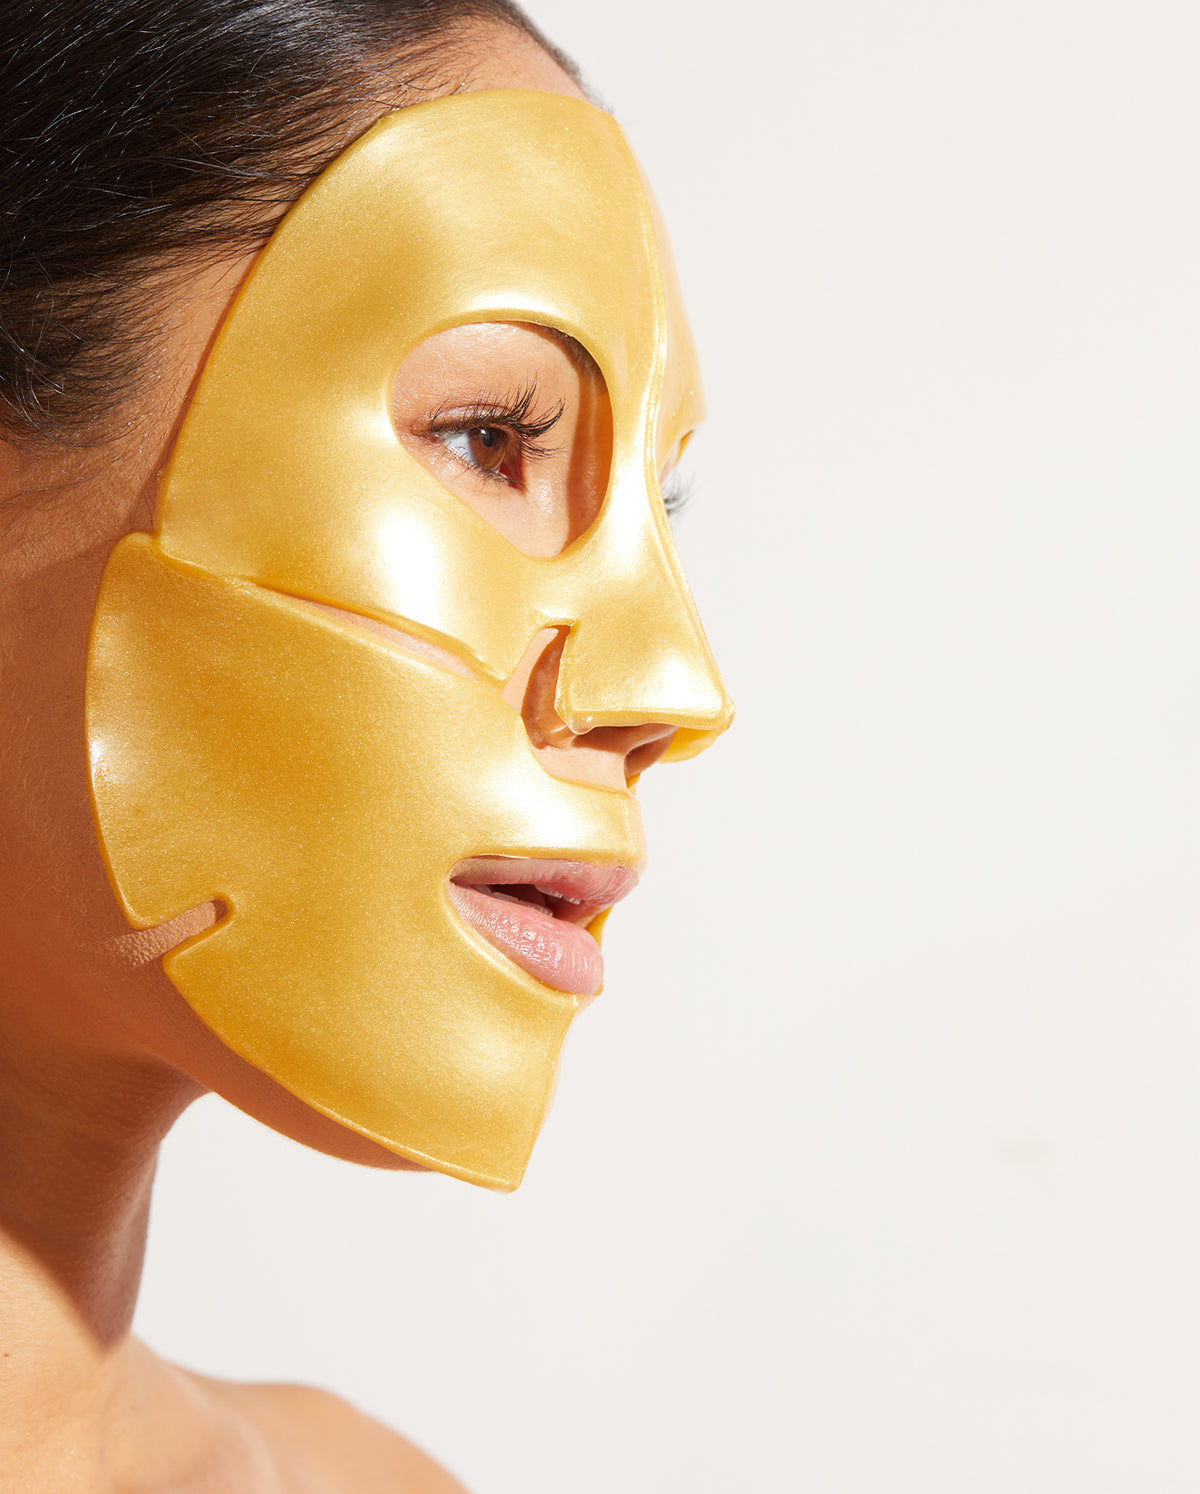 Golden Glow Face Mask - Single